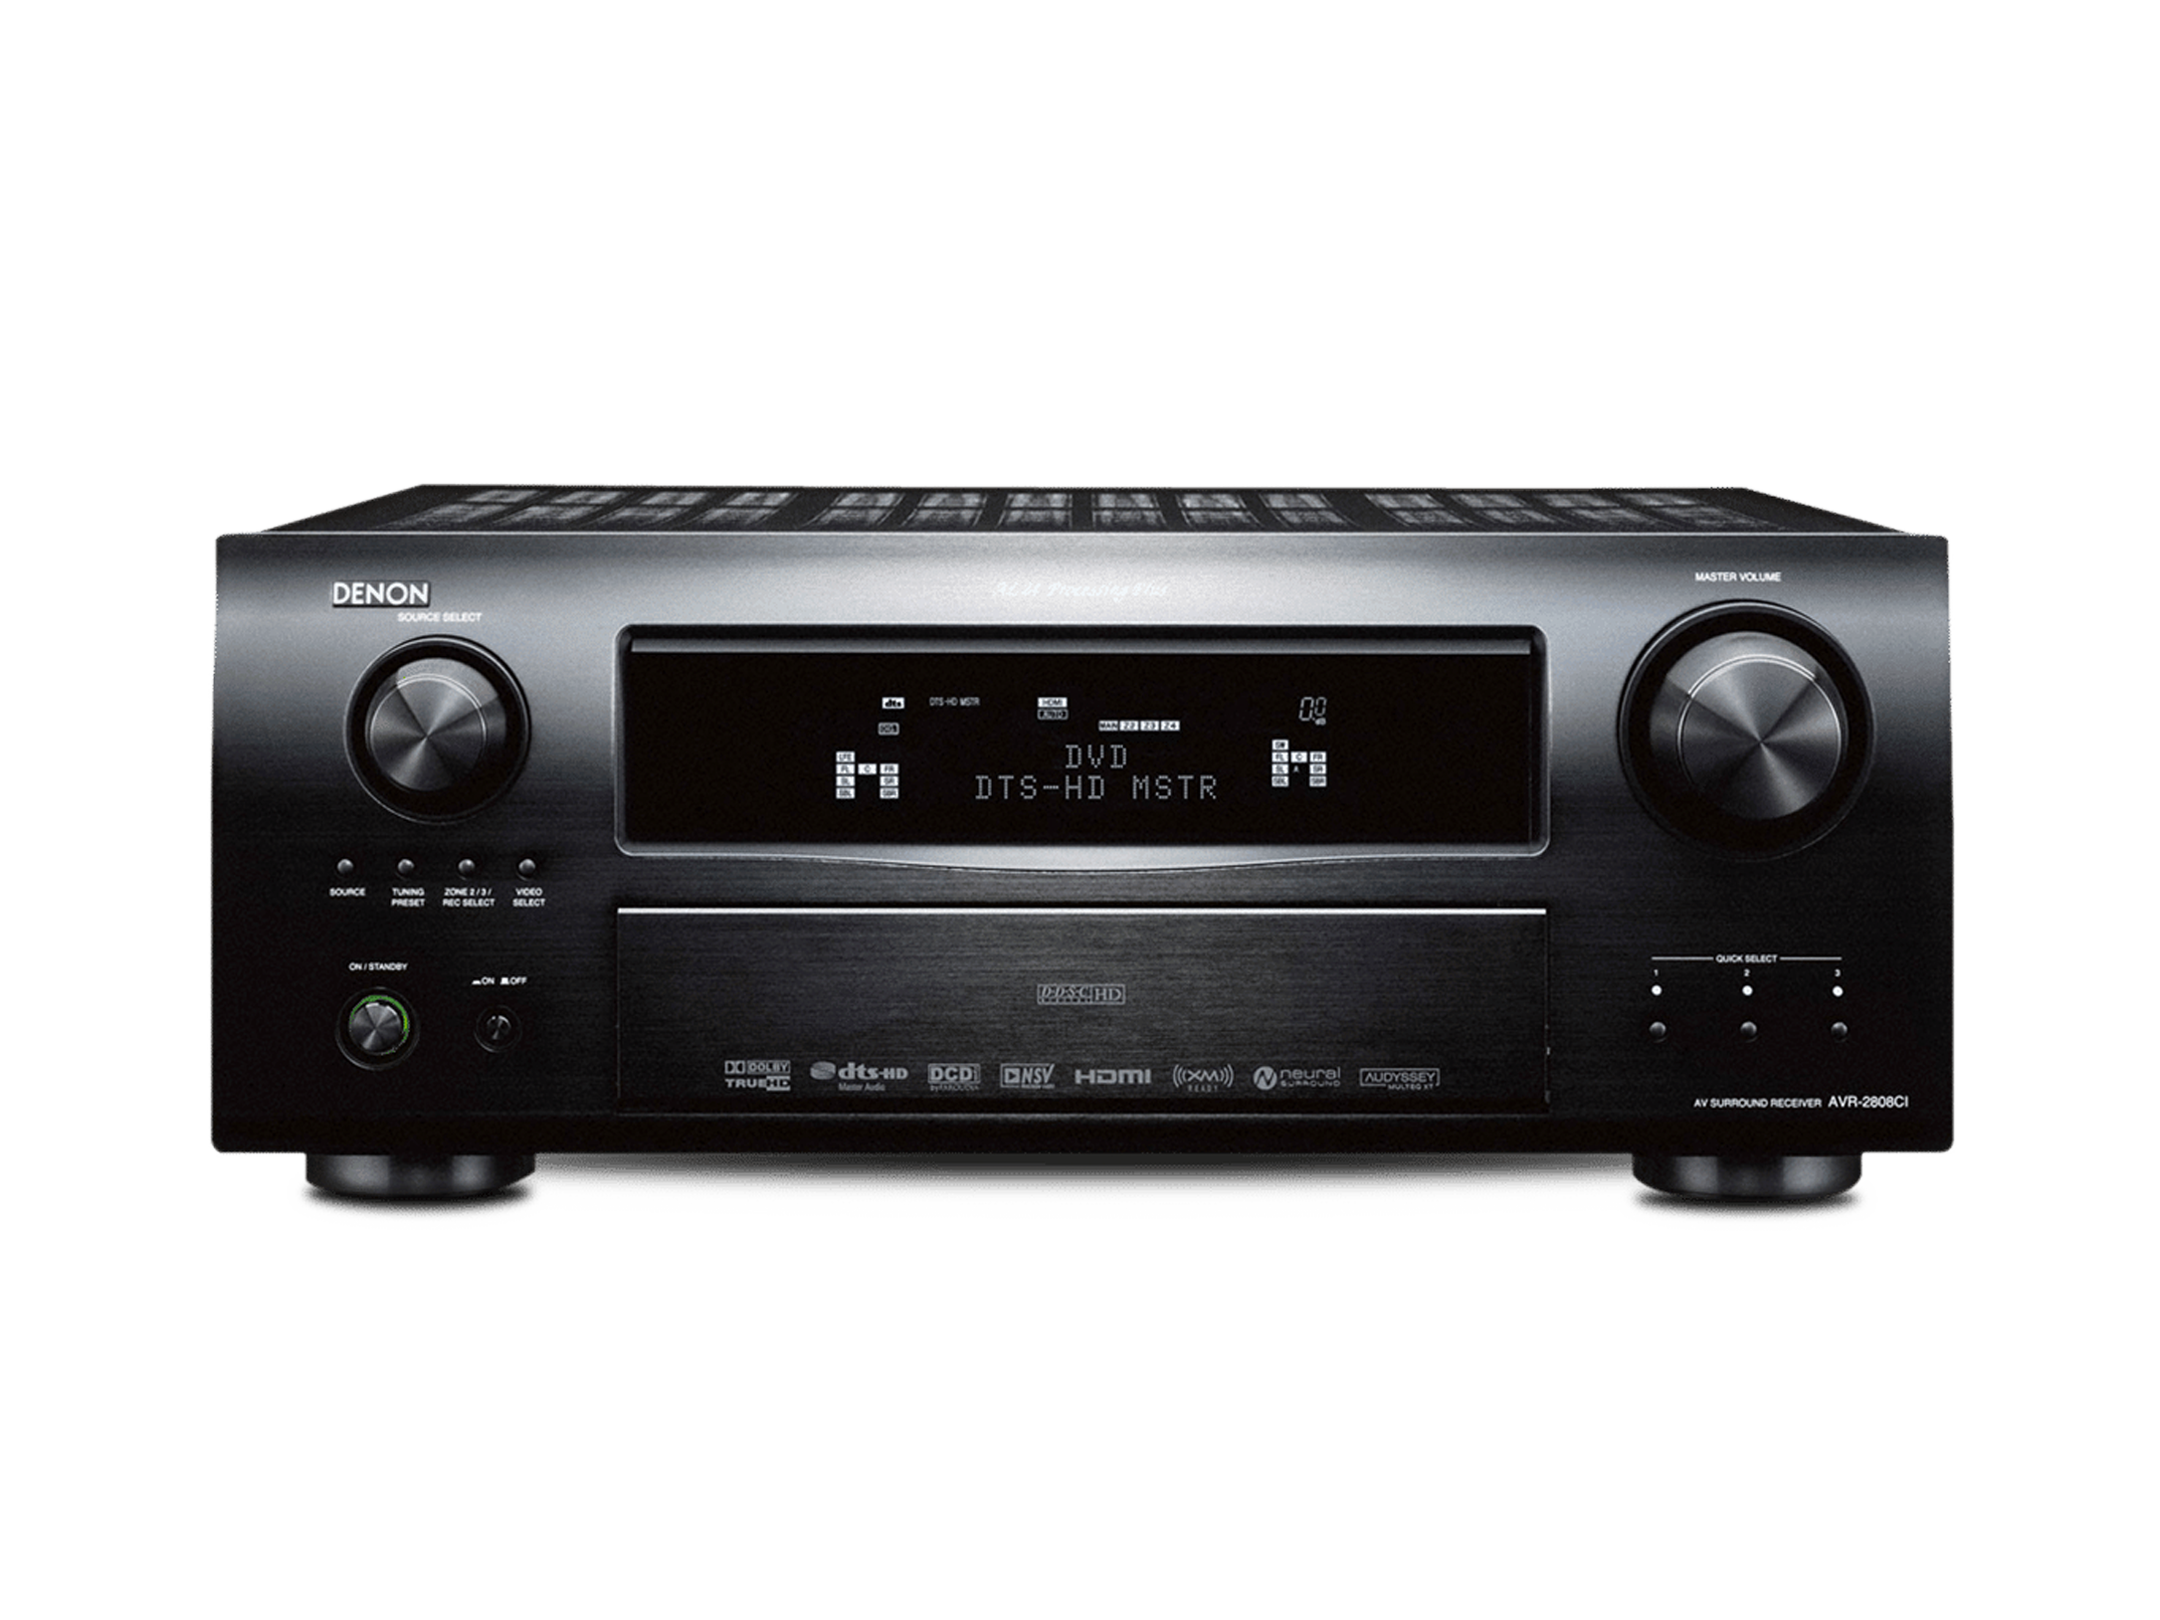 AVR-2808CI - Home theater AV receiver with HDMI digital video